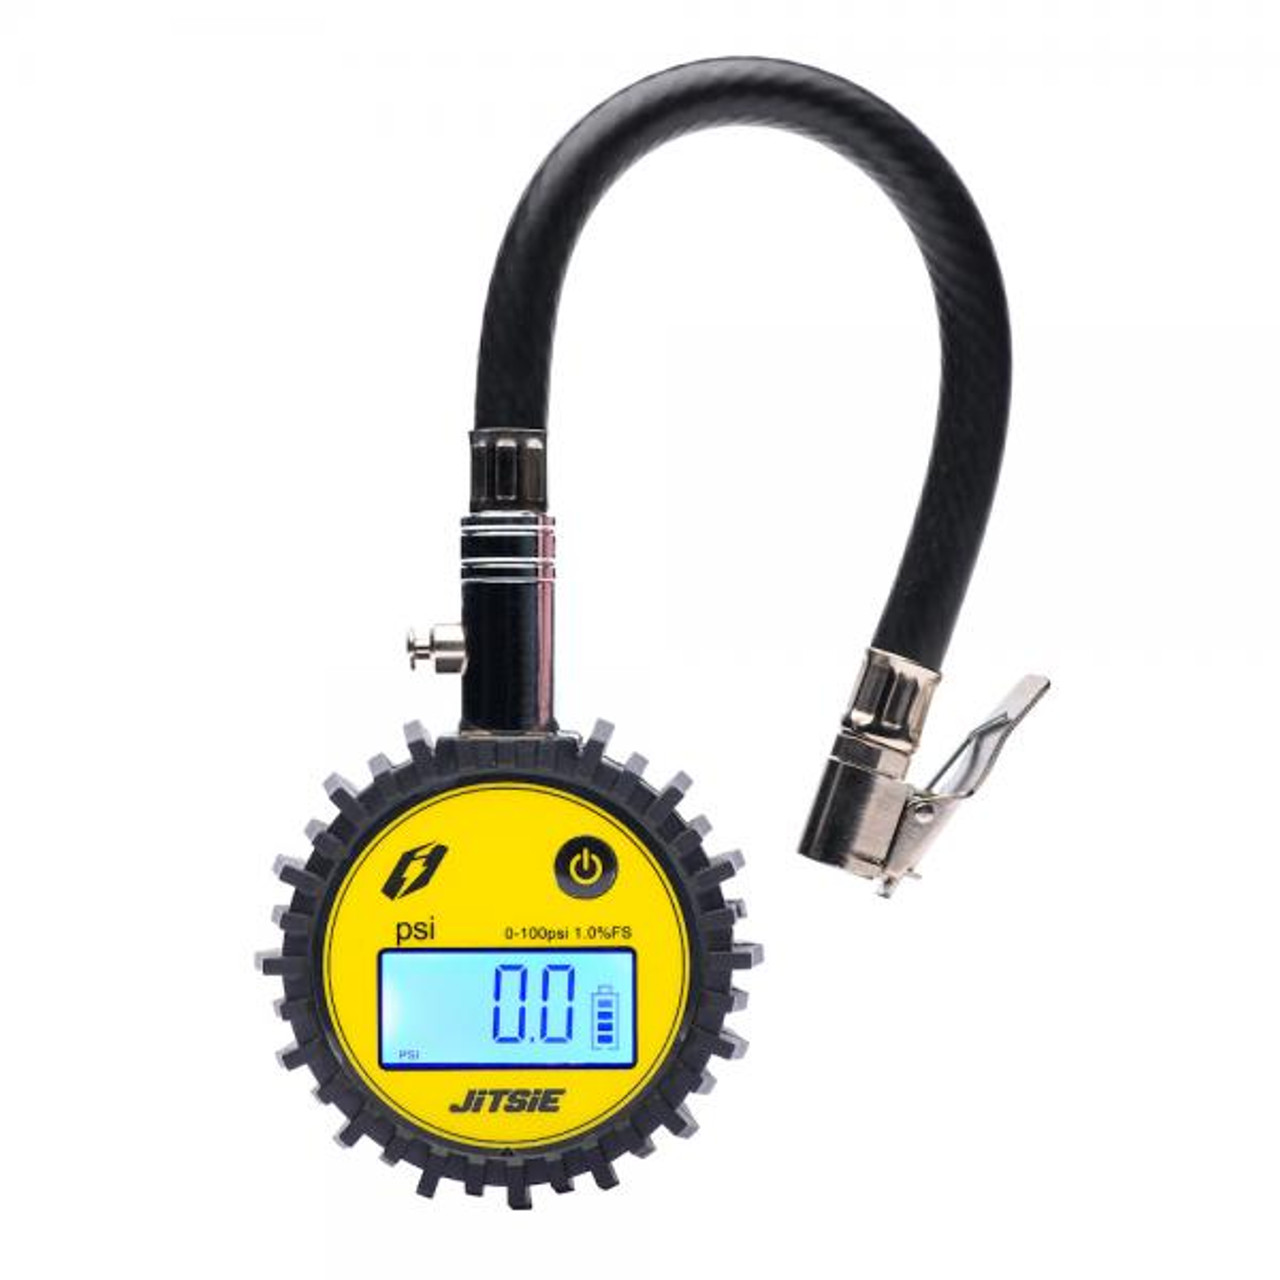 Digital tire pressure meter with hose 0-100PSI